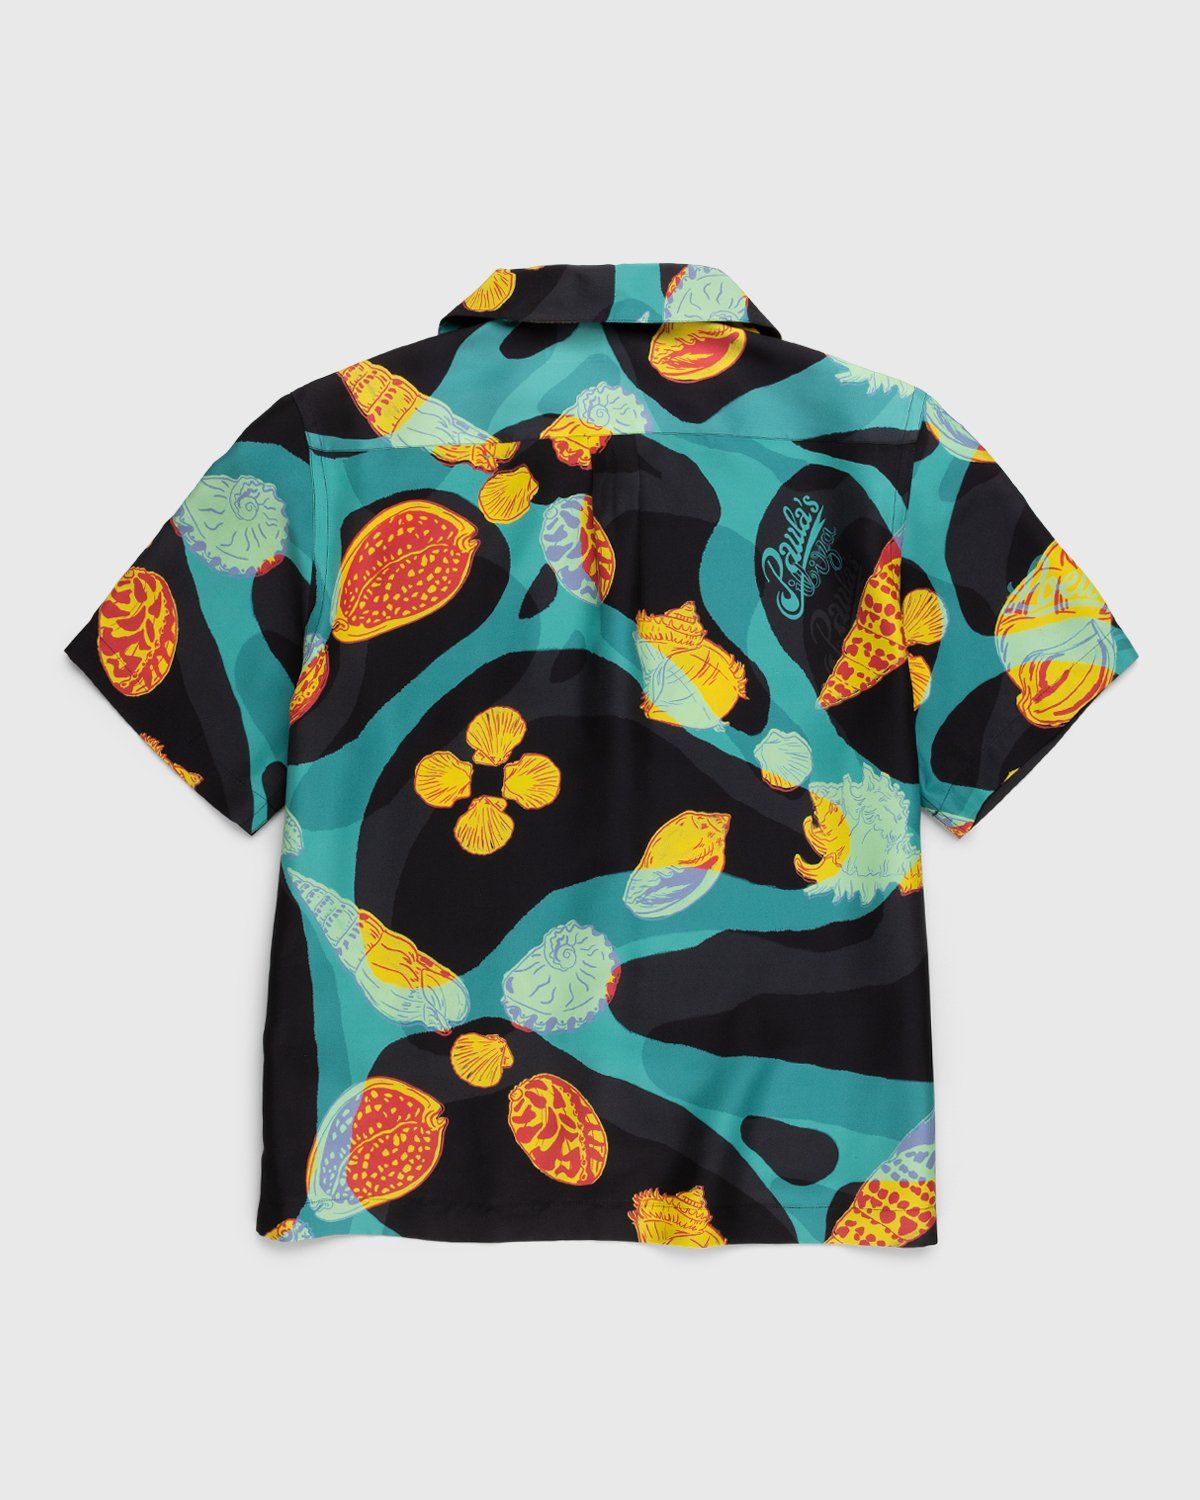 Loewe – Paula's Ibiza Shell Print Bowling Shirt Black - Shortsleeve Shirts - Multi - Image 2